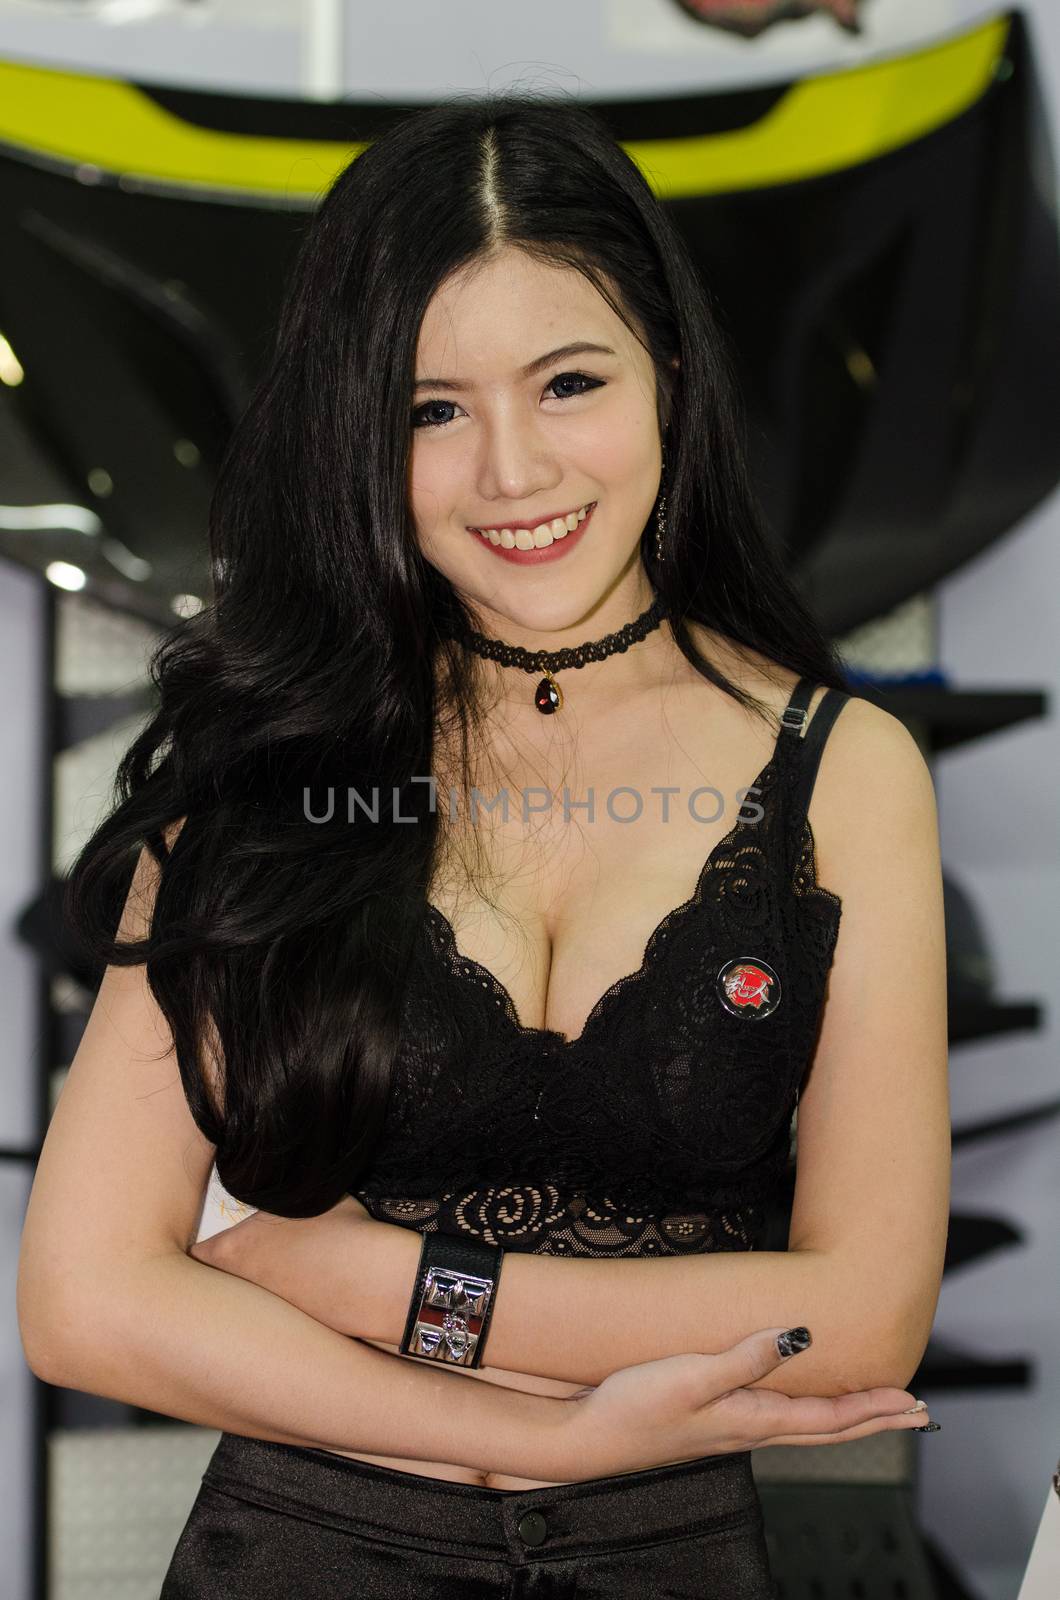 NONTHABURI - JUNE 22 : Unidentified model on display at Bangkok International Auto Salon 2016 on June 22, 2016 in Nonthaburi, Thailand.